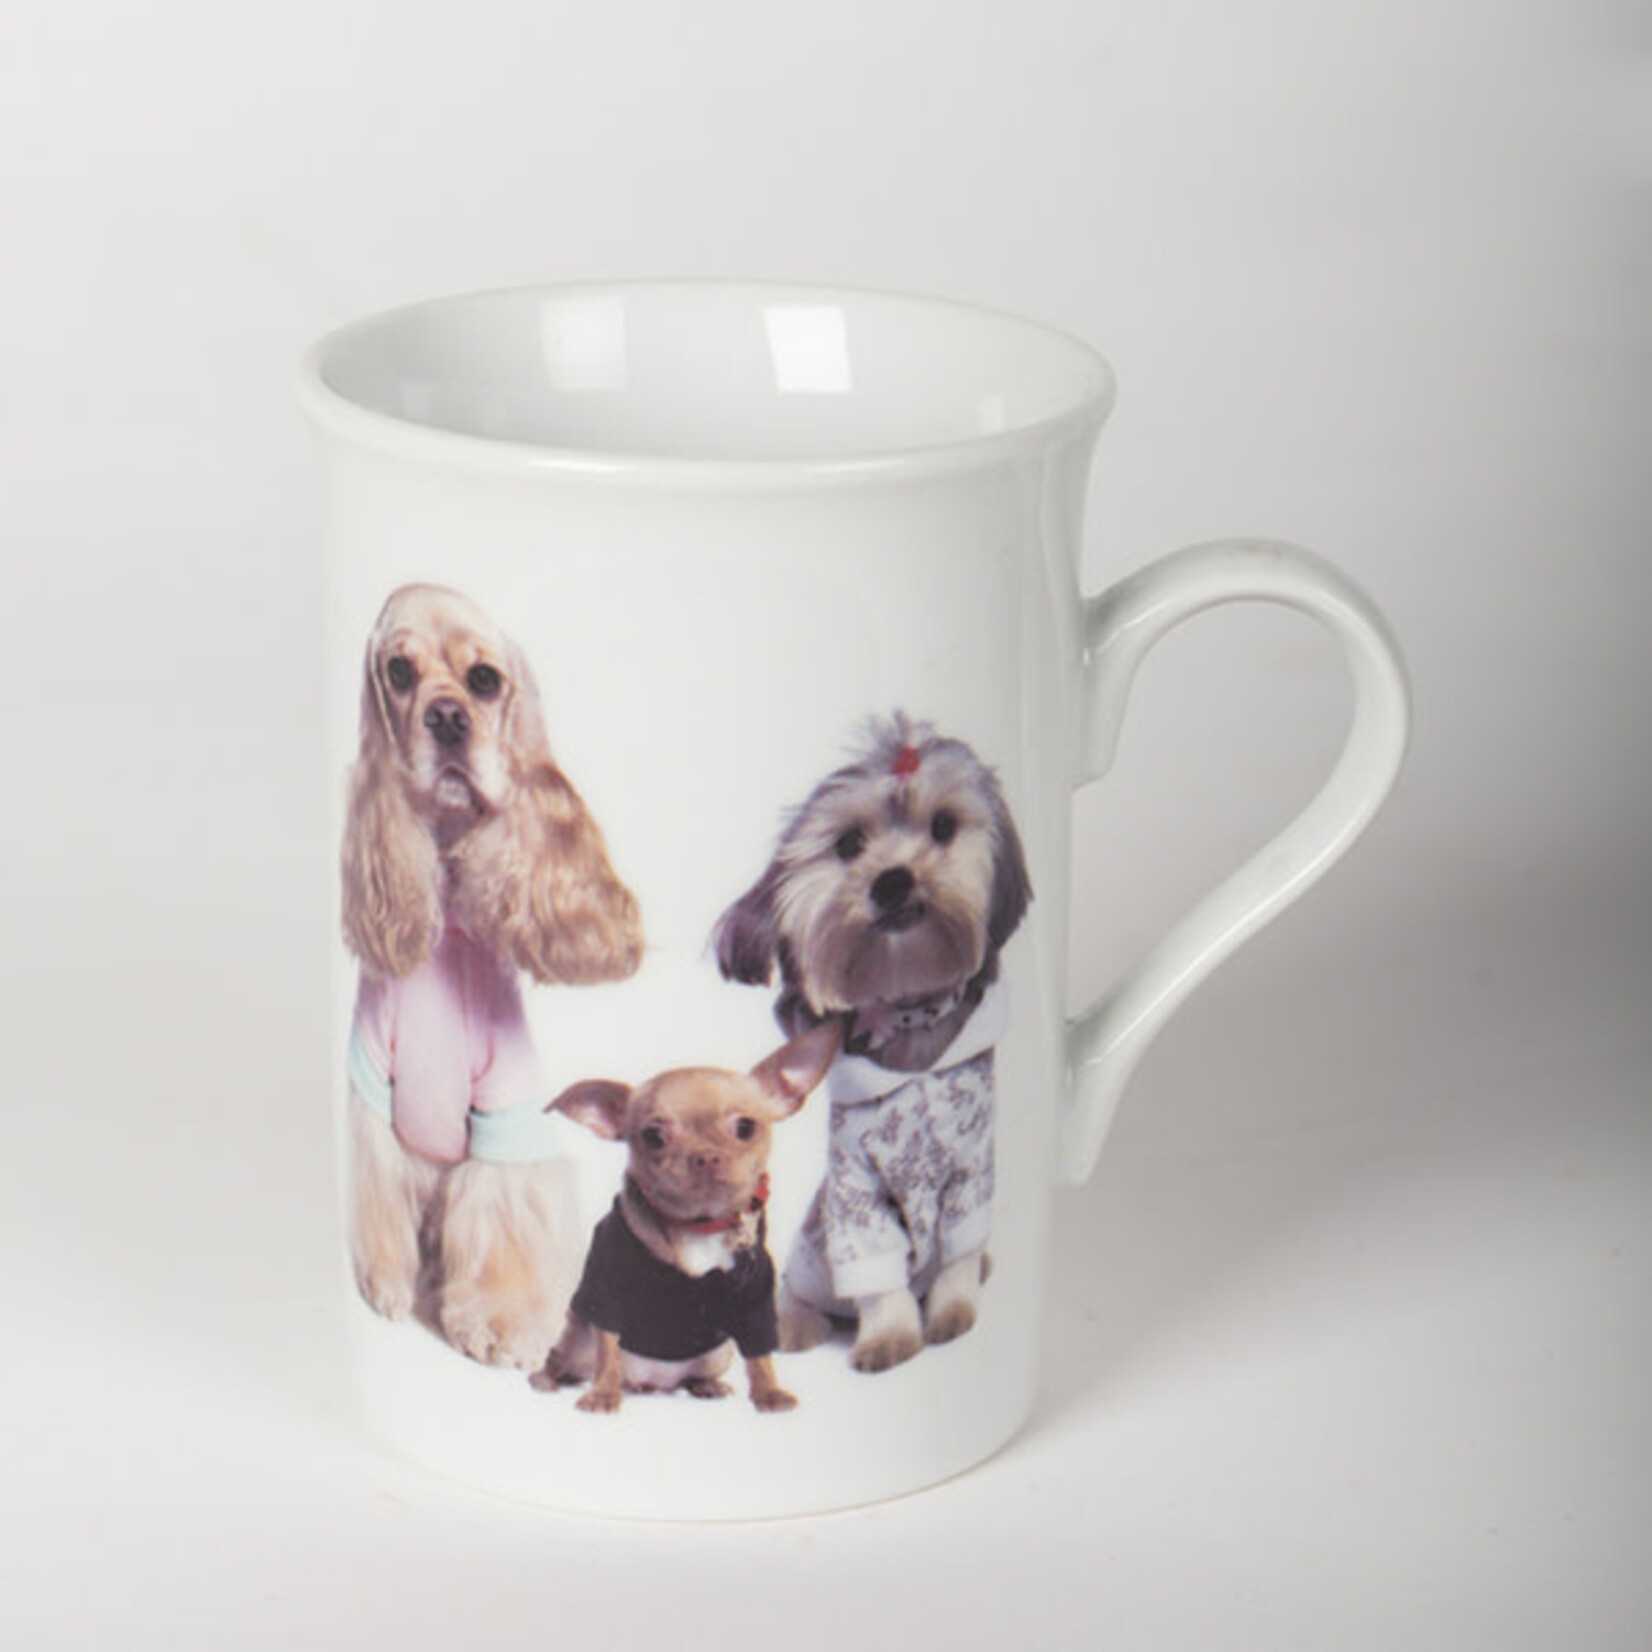 Forpost Trade Mug w/Dogs